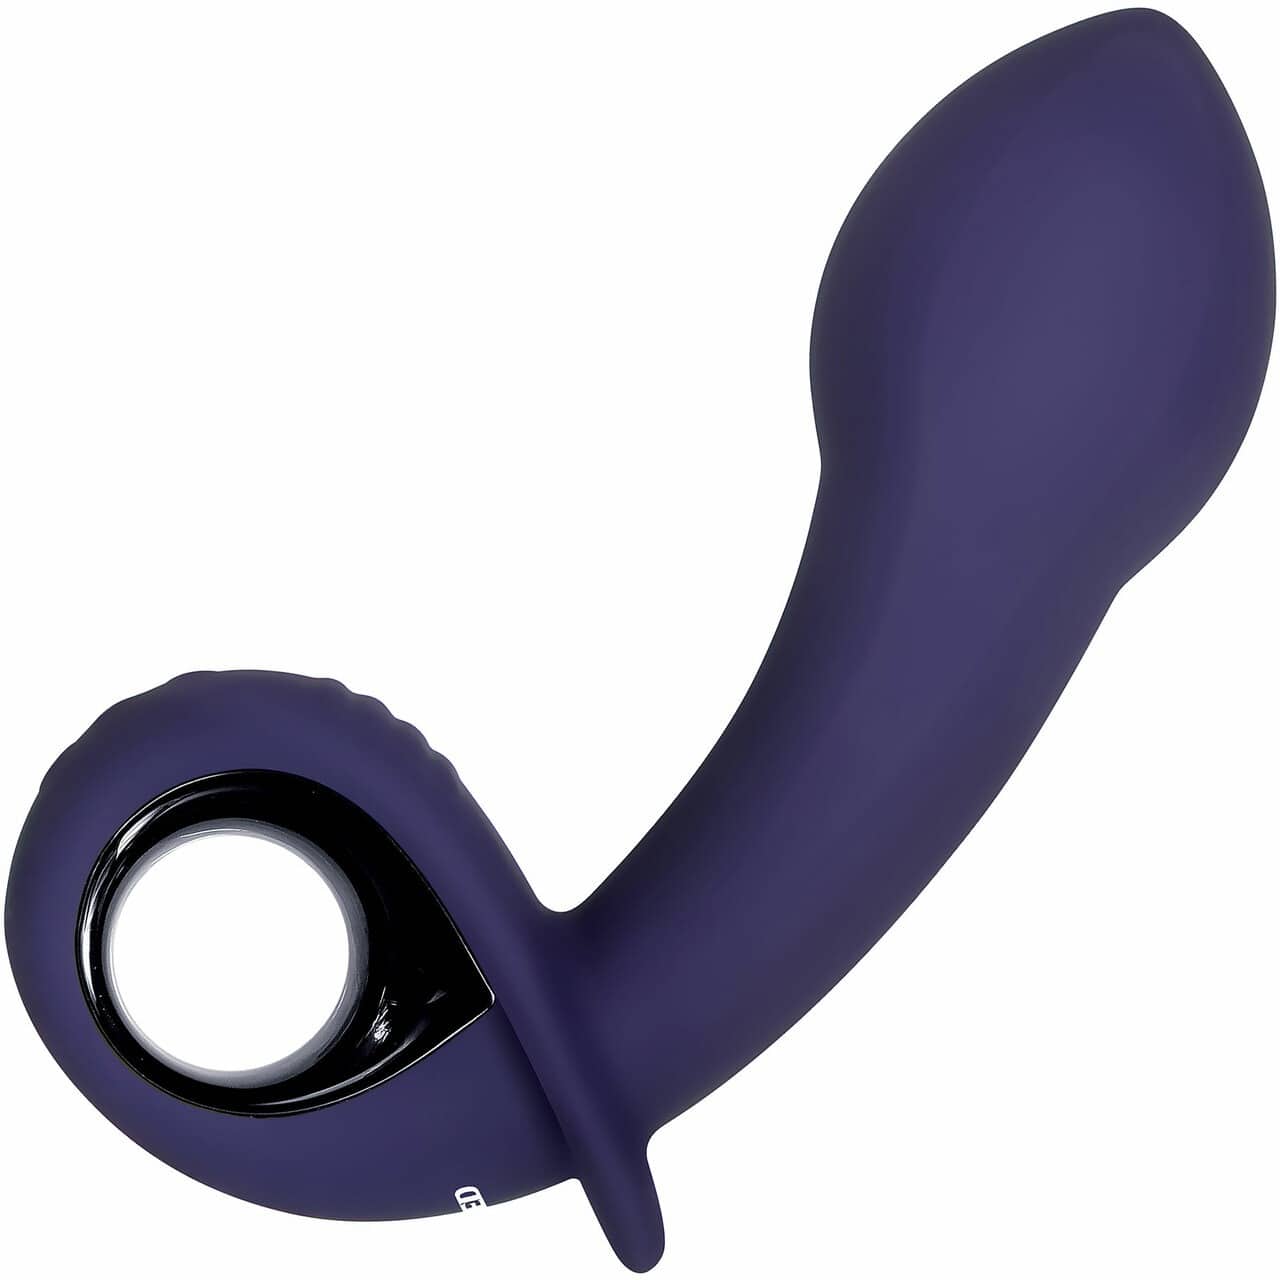 Inflatable G-Spot Vibrator By Evolved Novelties